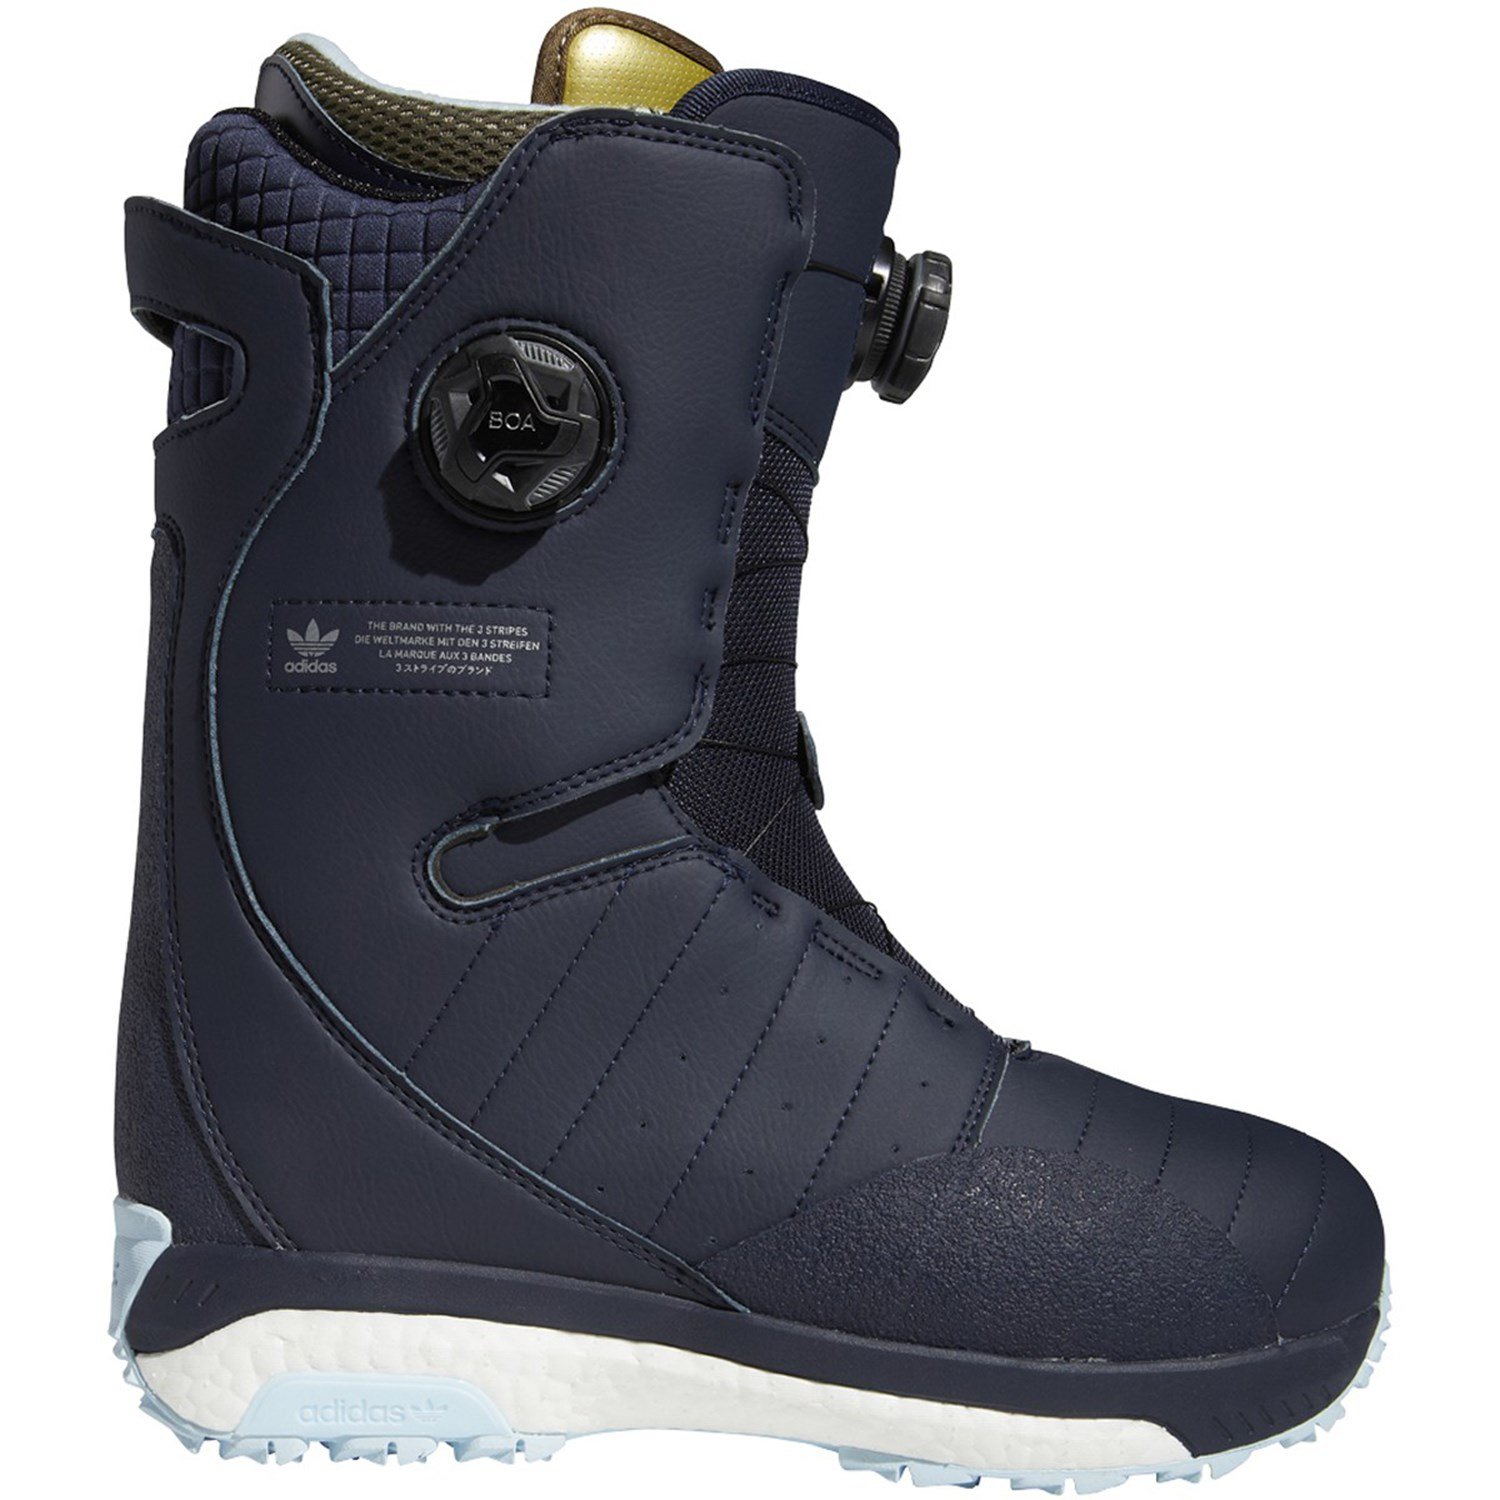 Adidas Acerra 3ST ADV Snowboard Boots 